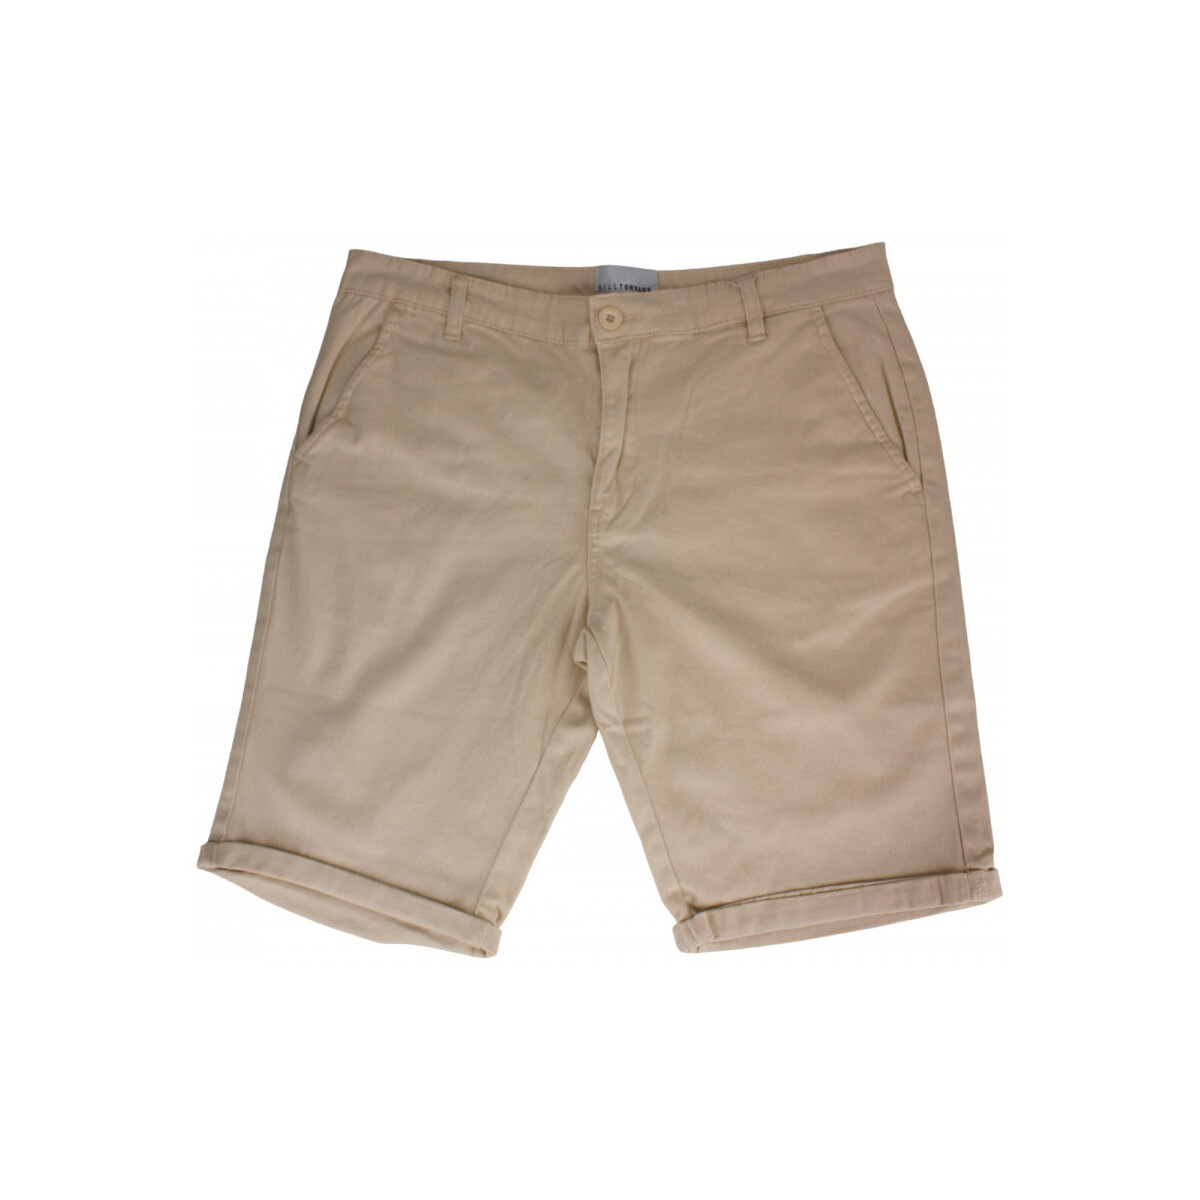 Vêtements Homme Shorts / Bermudas Billtornade Revers Beige